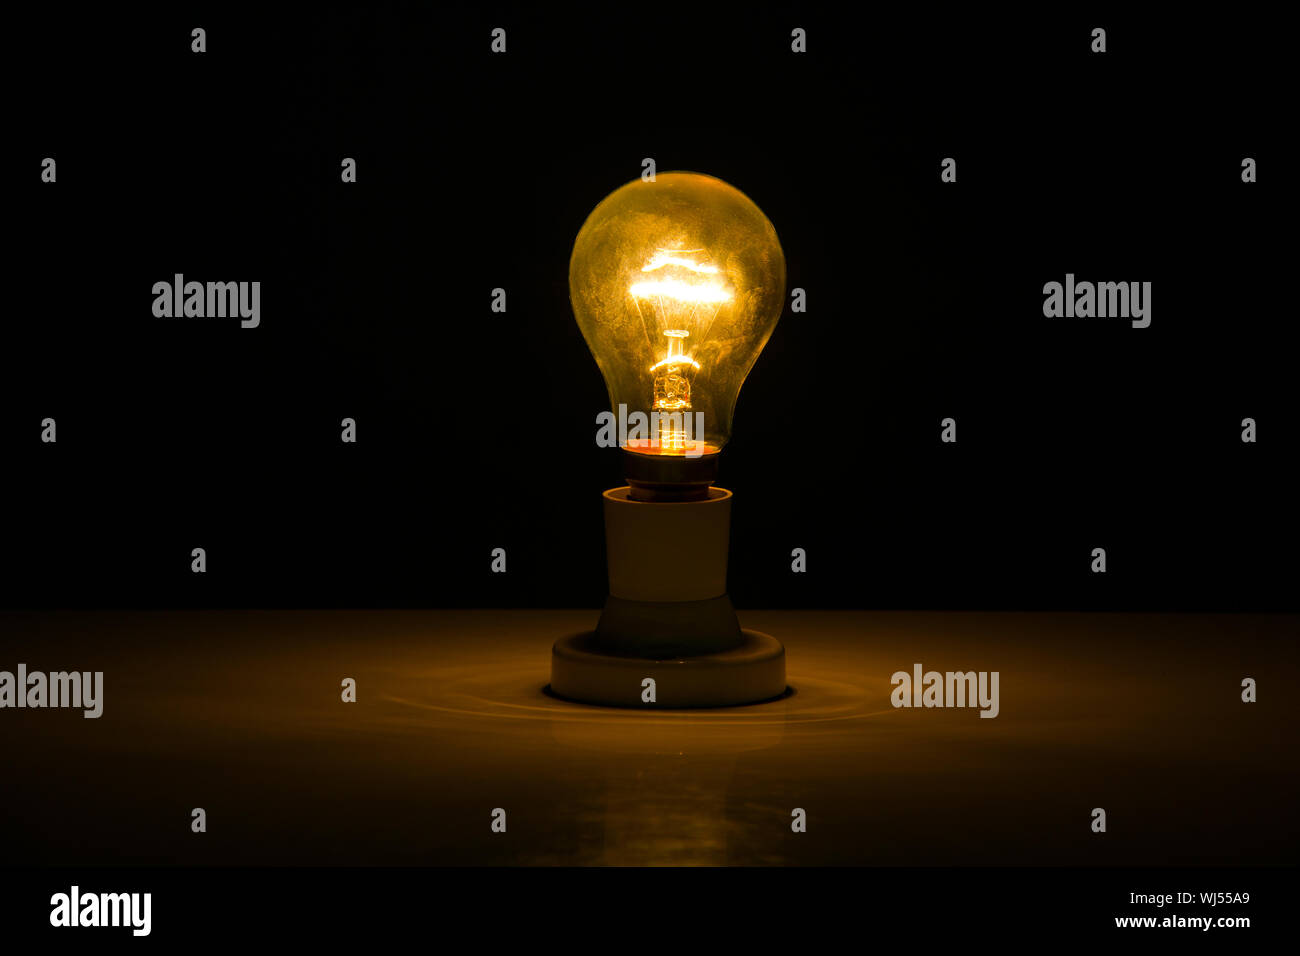 Illuminated light bulb in dark room Stock Photo